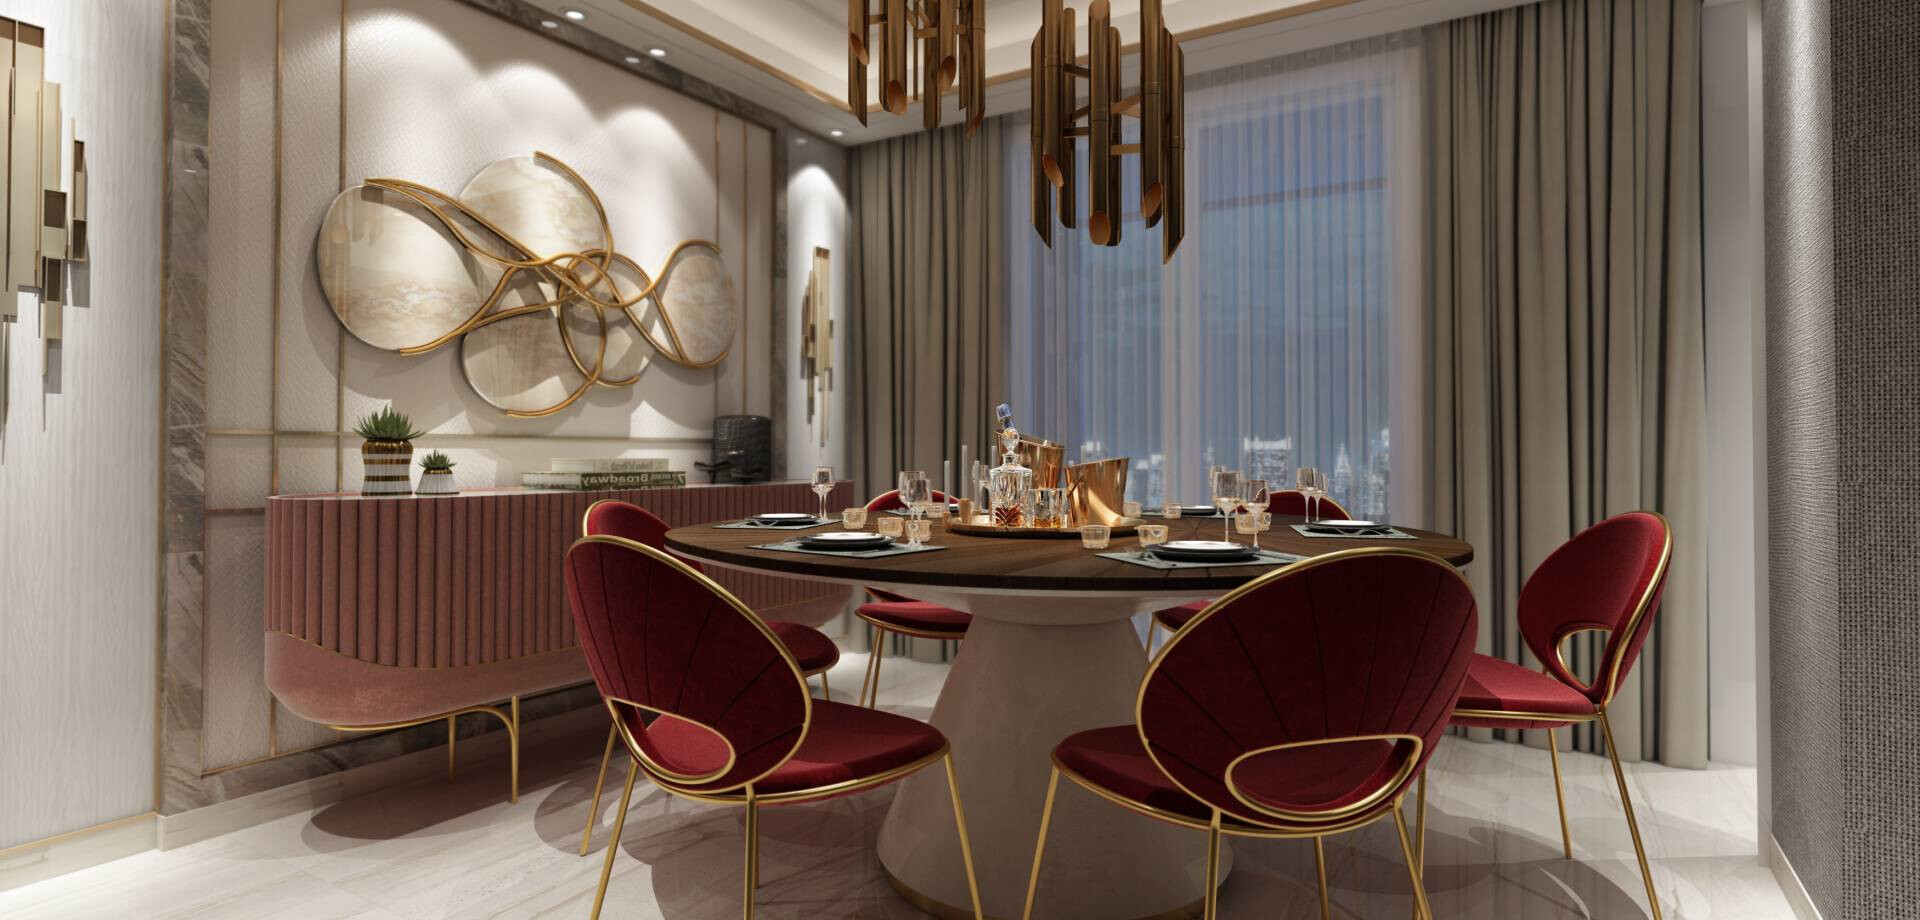 Luxury Interior Design - ALMA de LUCE with black pearl chair